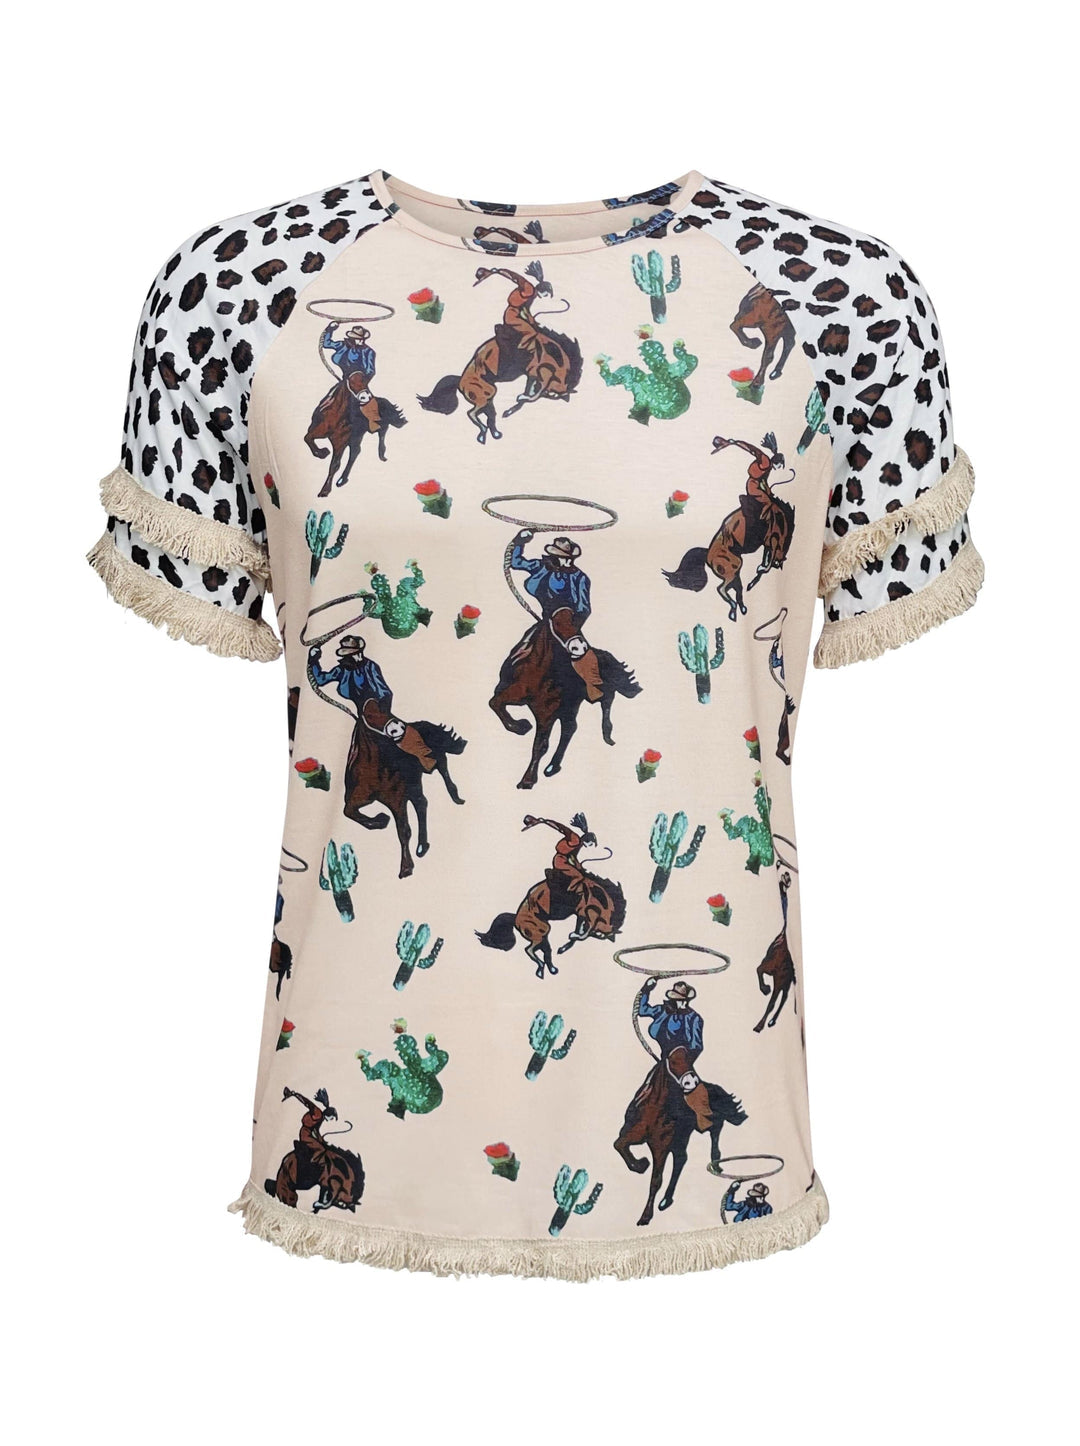 Ladies Cowboy/Rodeo Print Shirt with Fringe - 1001